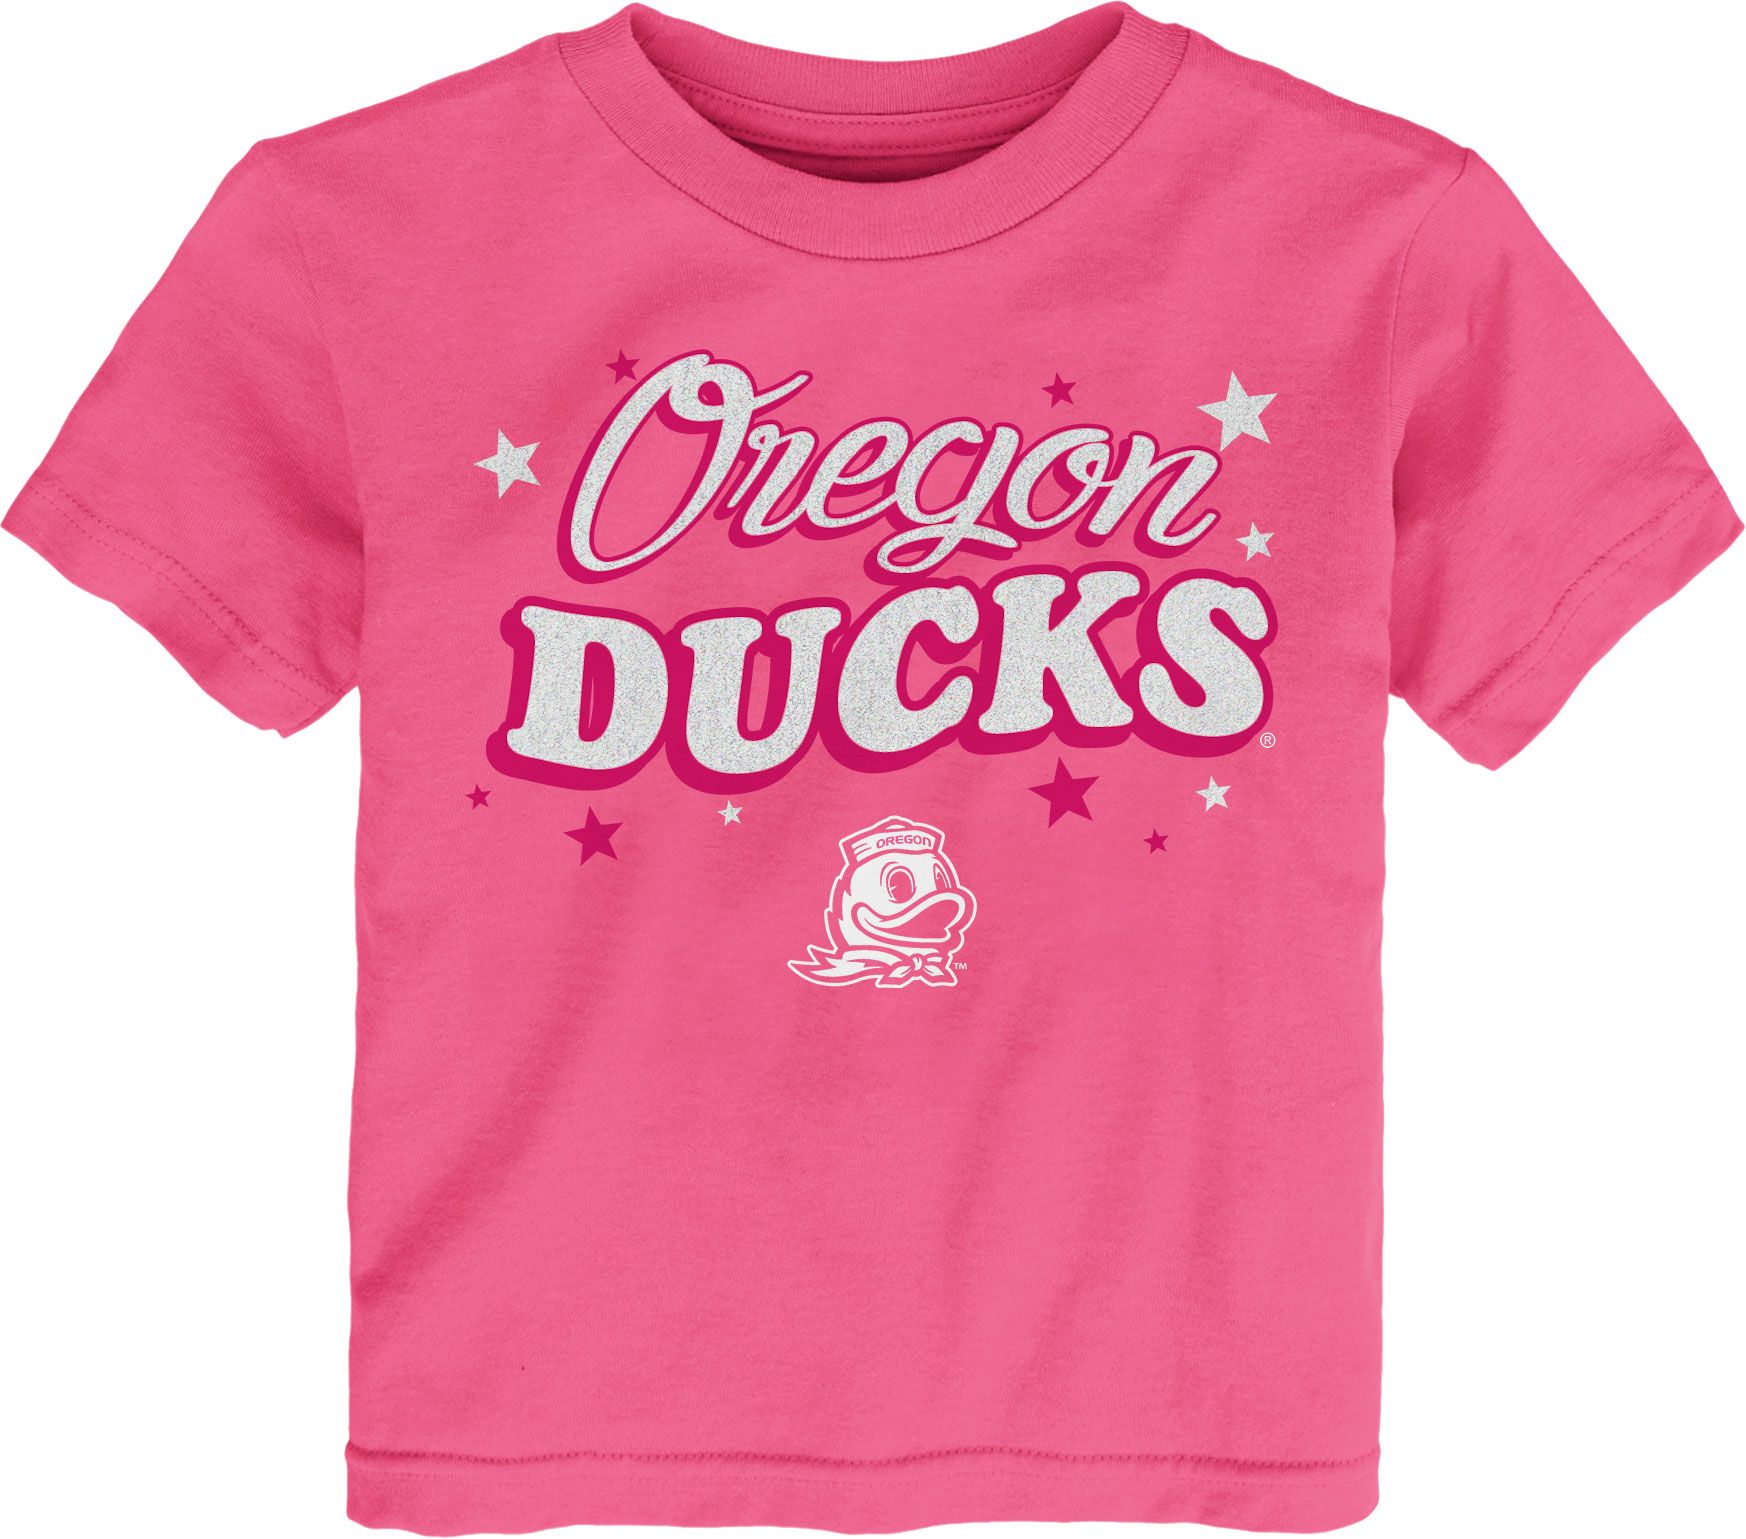 Oregon Ducks Youth Apparel | Best Price Guarantee at DICK'S